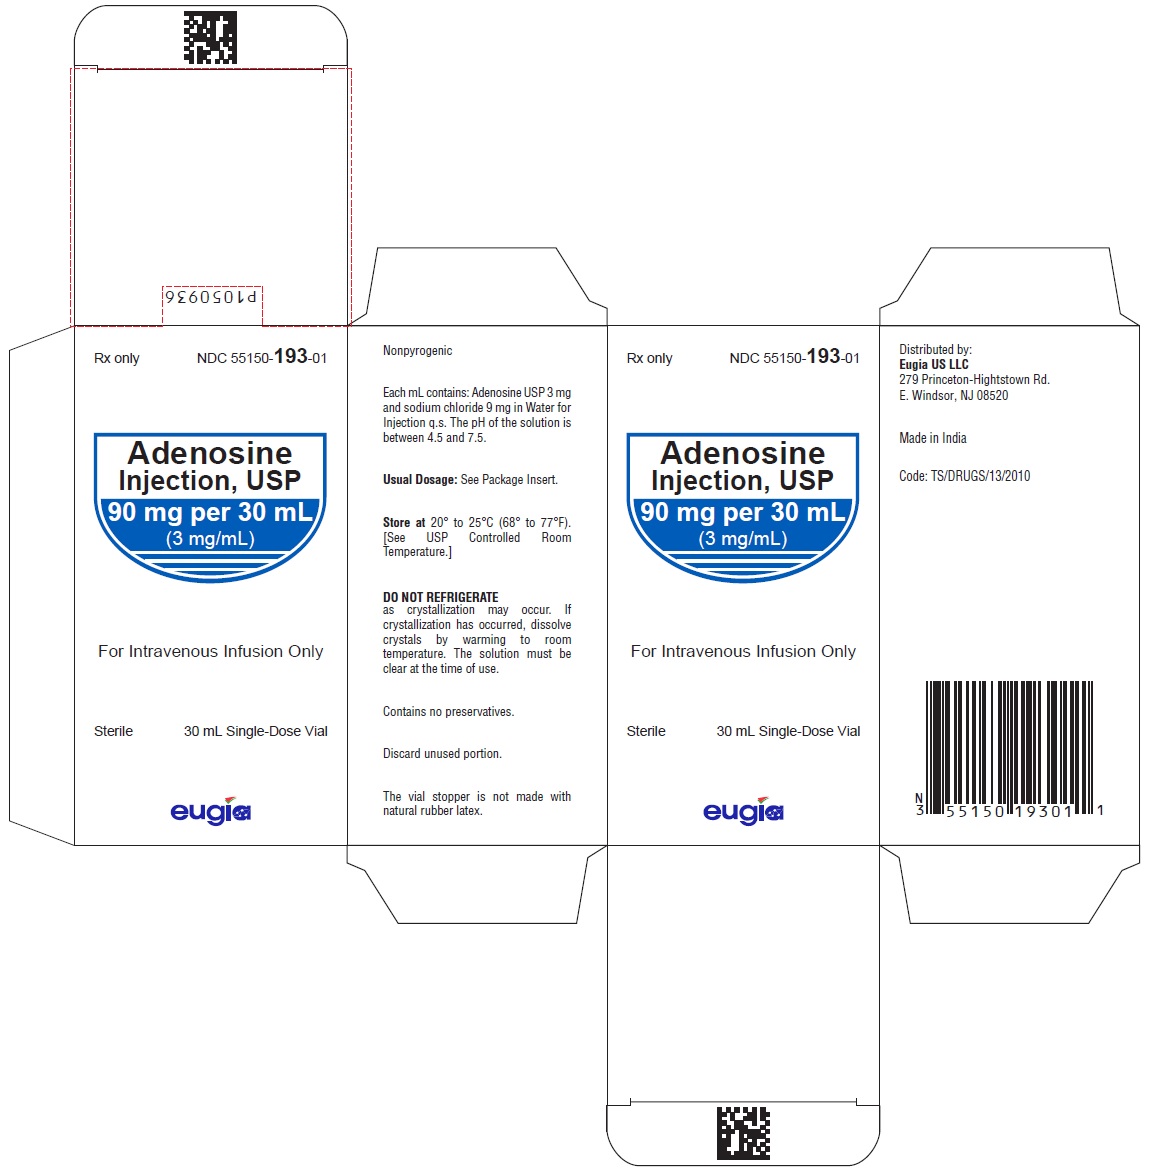 PACKAGE LABEL-PRINCIPAL DISPLAY PANEL - 90 mg per 30 mL (3 mg / mL) - Container-Carton (1 Vial)